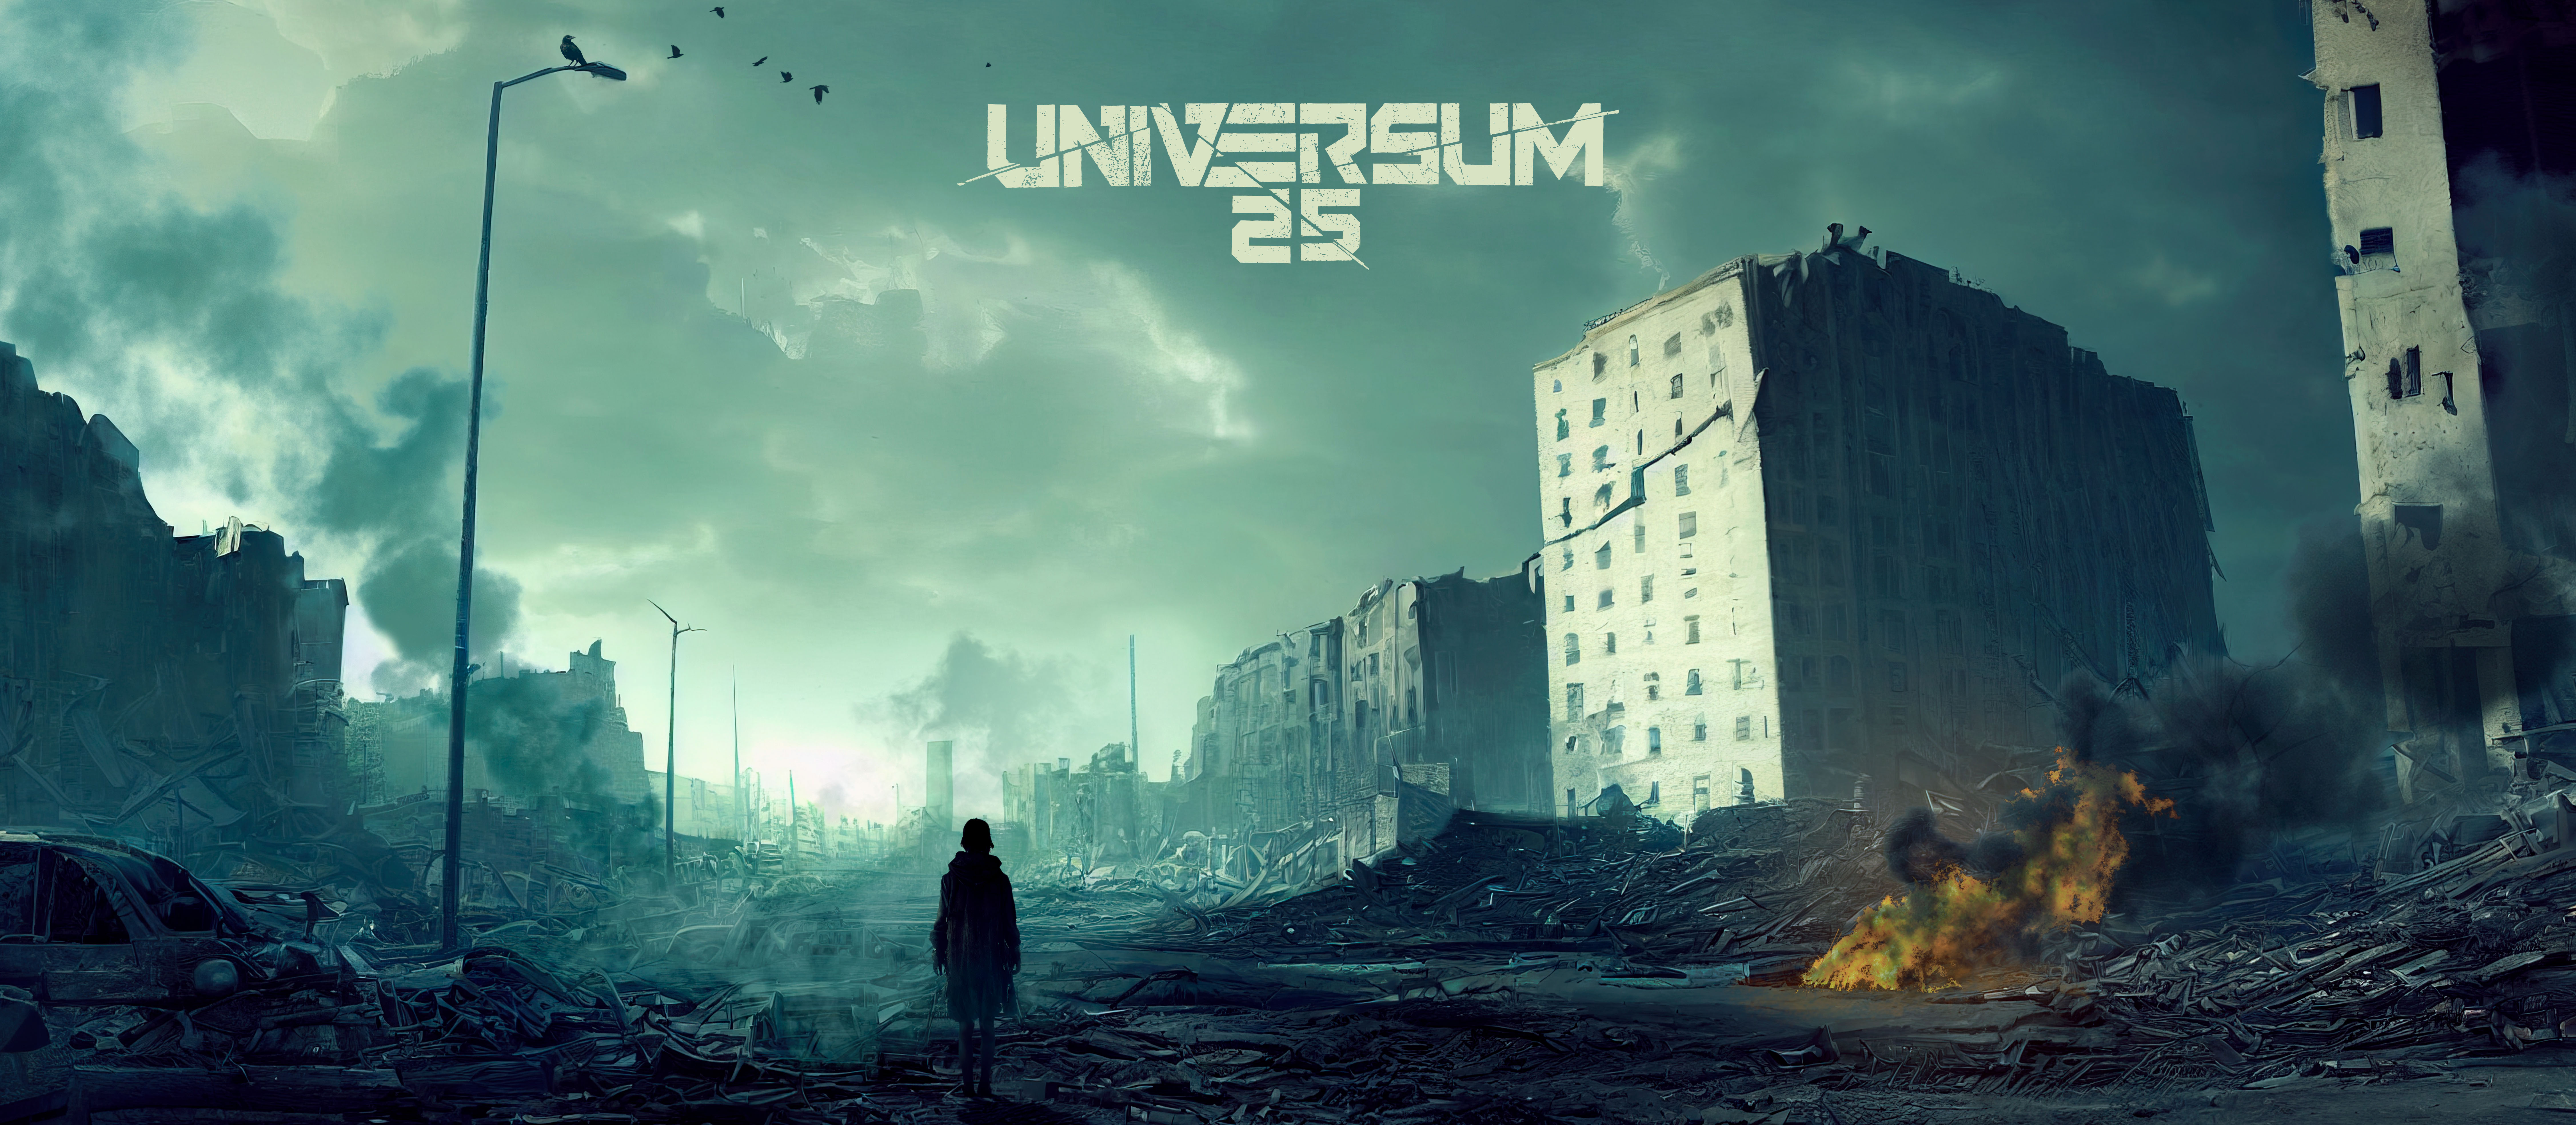 BRV Universum25 artist header